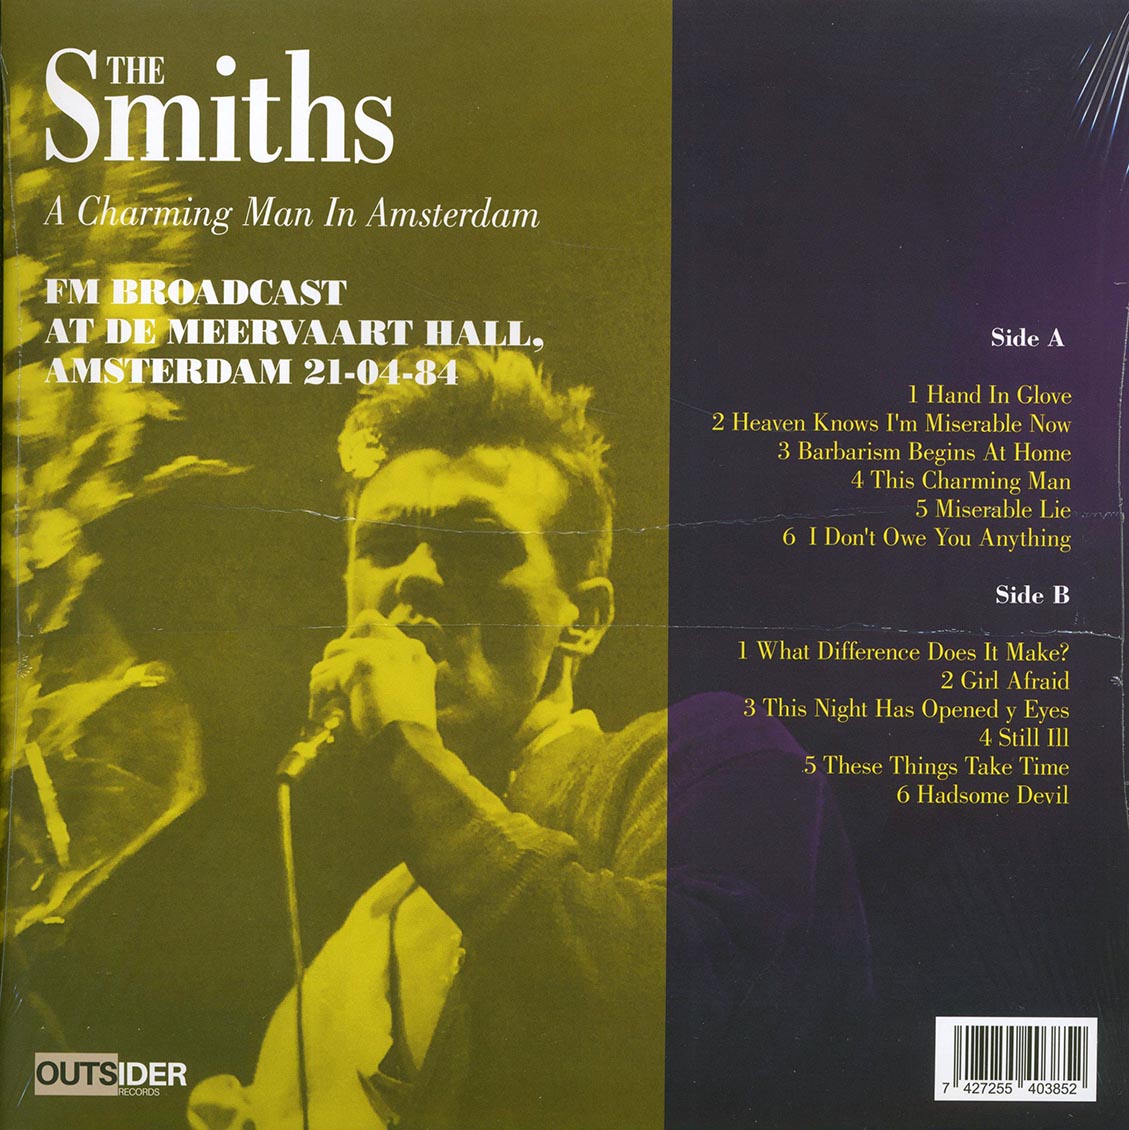 The Smiths - A Charming Man In Amsterdam: De Meervaart Hall, 21-04-84 (ltd. ed.) (purple vinyl) - Vinyl LP, LP